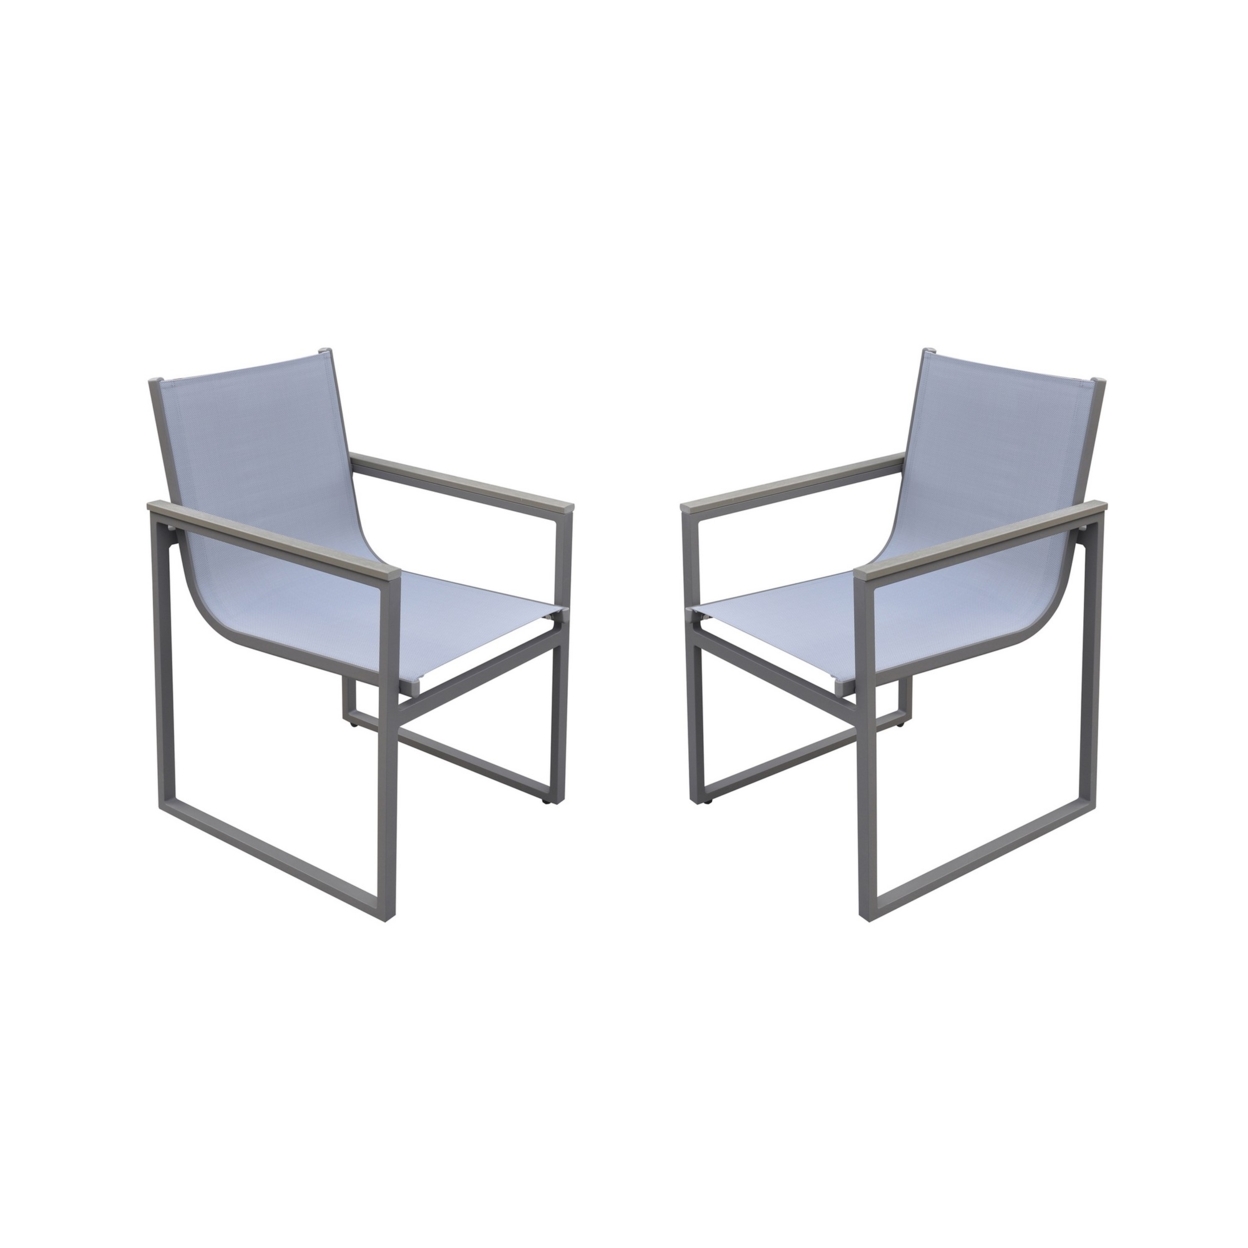 Aluminum Frame Patio Dining Chair With Mesh Sling, Set Of 2, Gray- Saltoro Sherpi